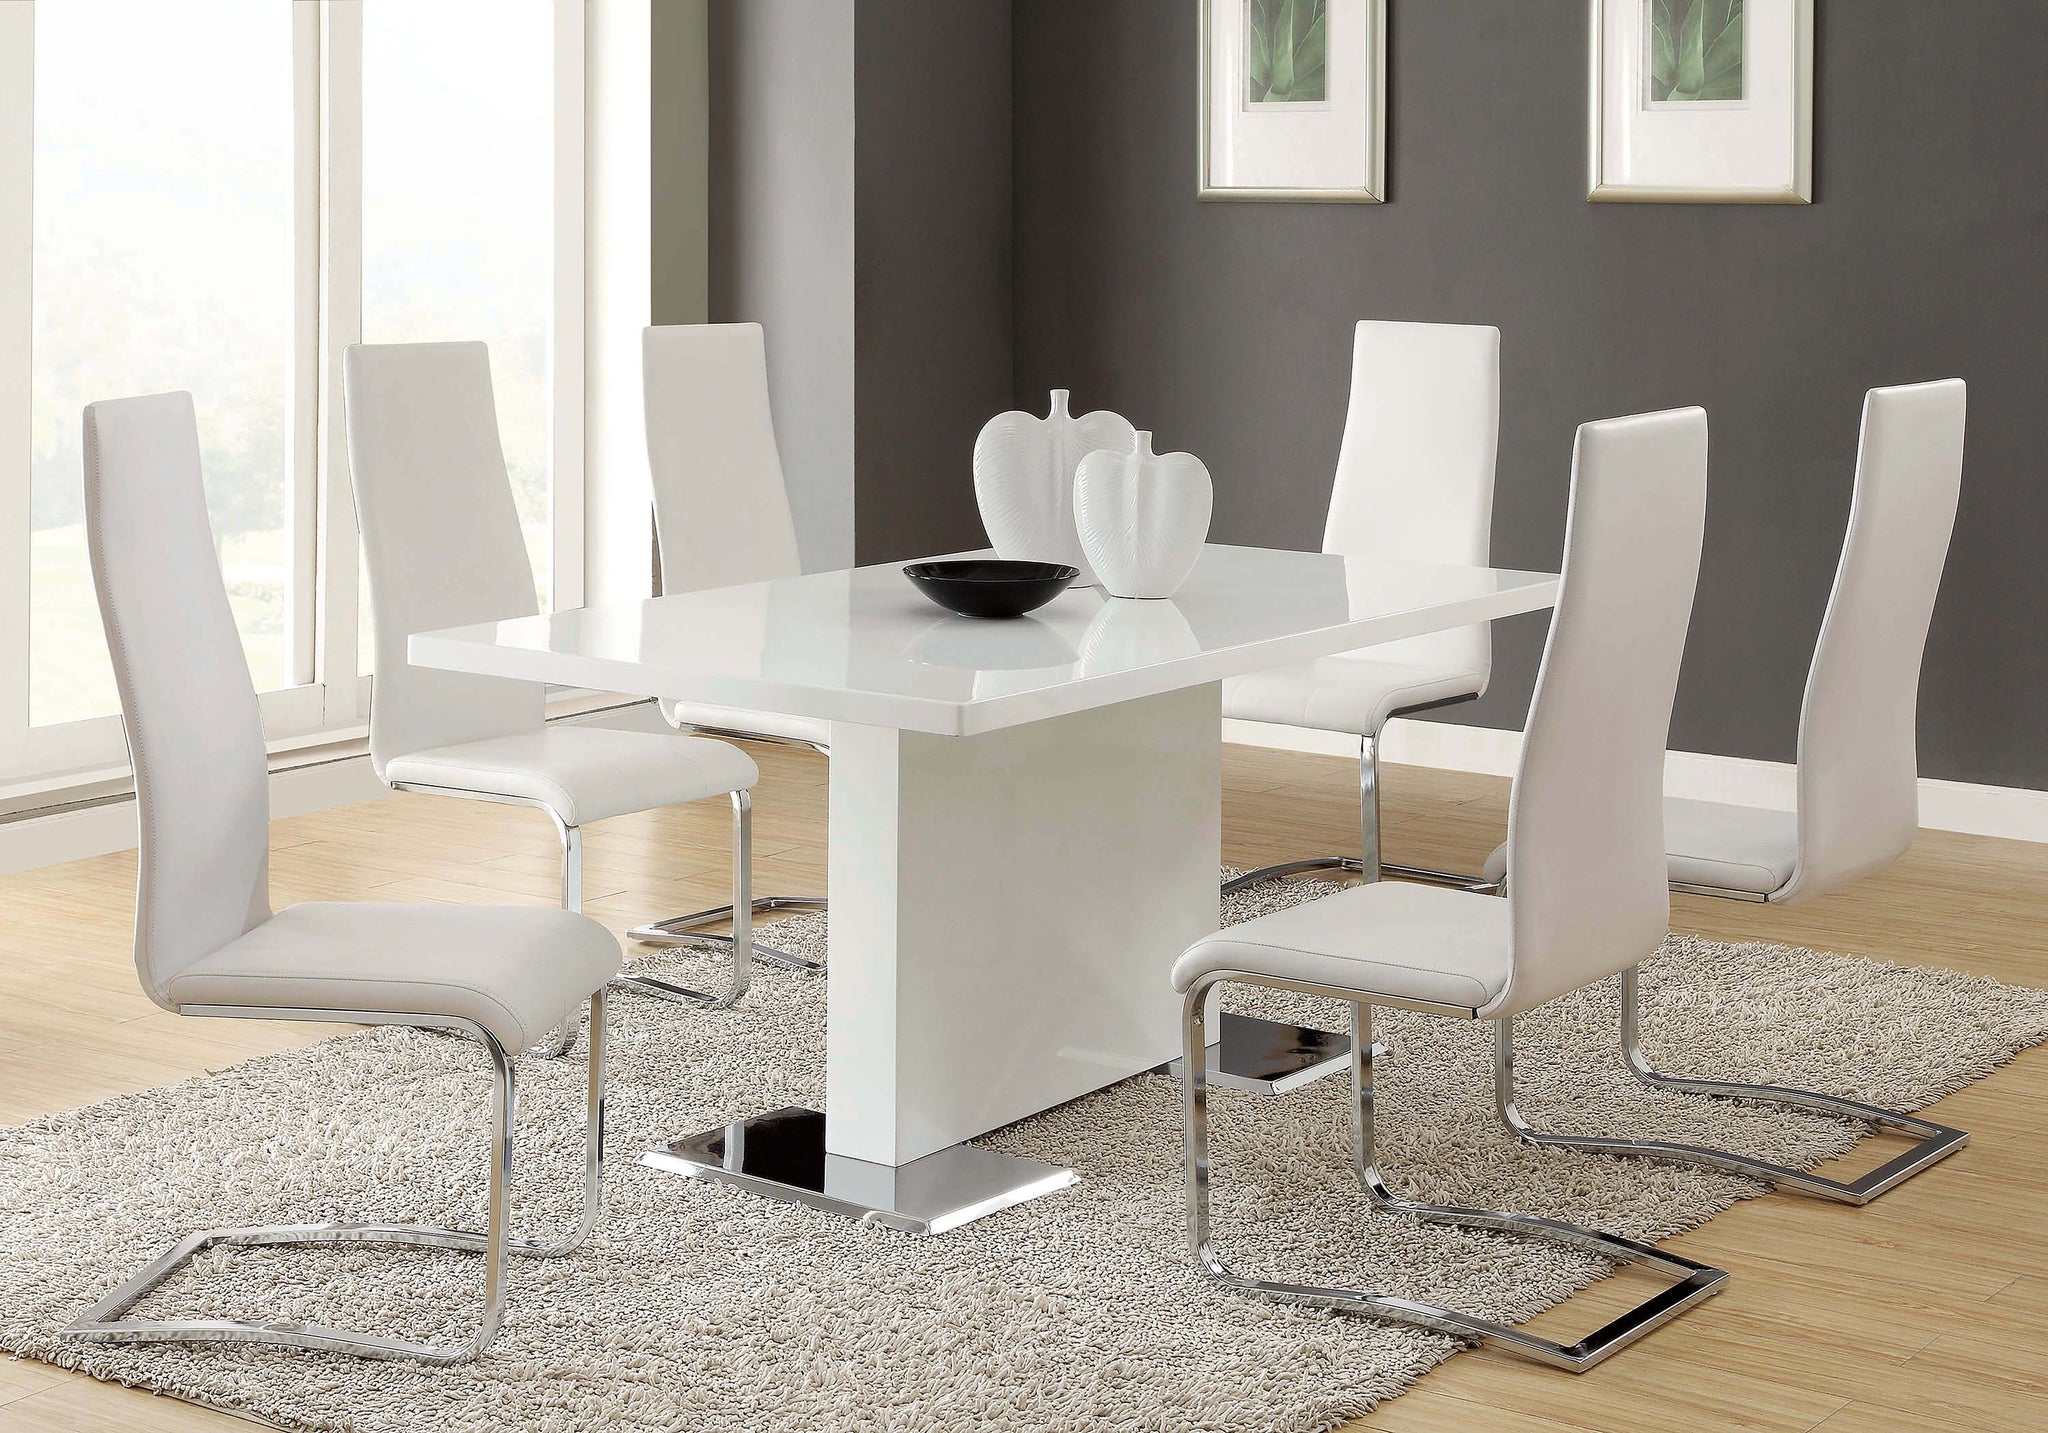 Montclair Side Chair - White